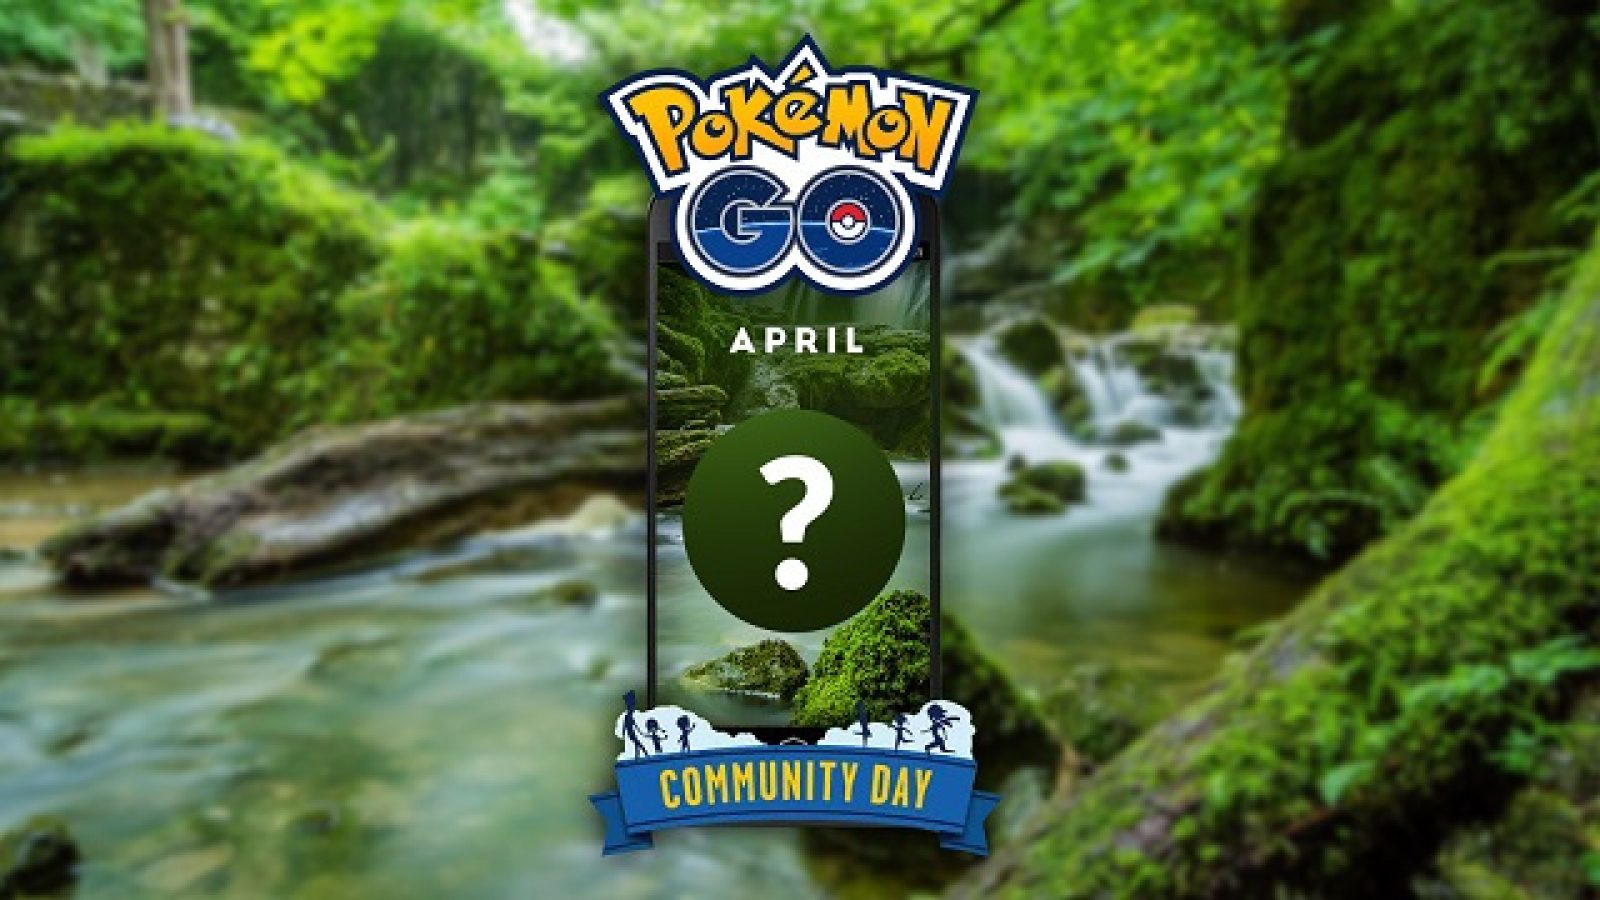 Pokemon Go June Community Day rumors date announced, who will